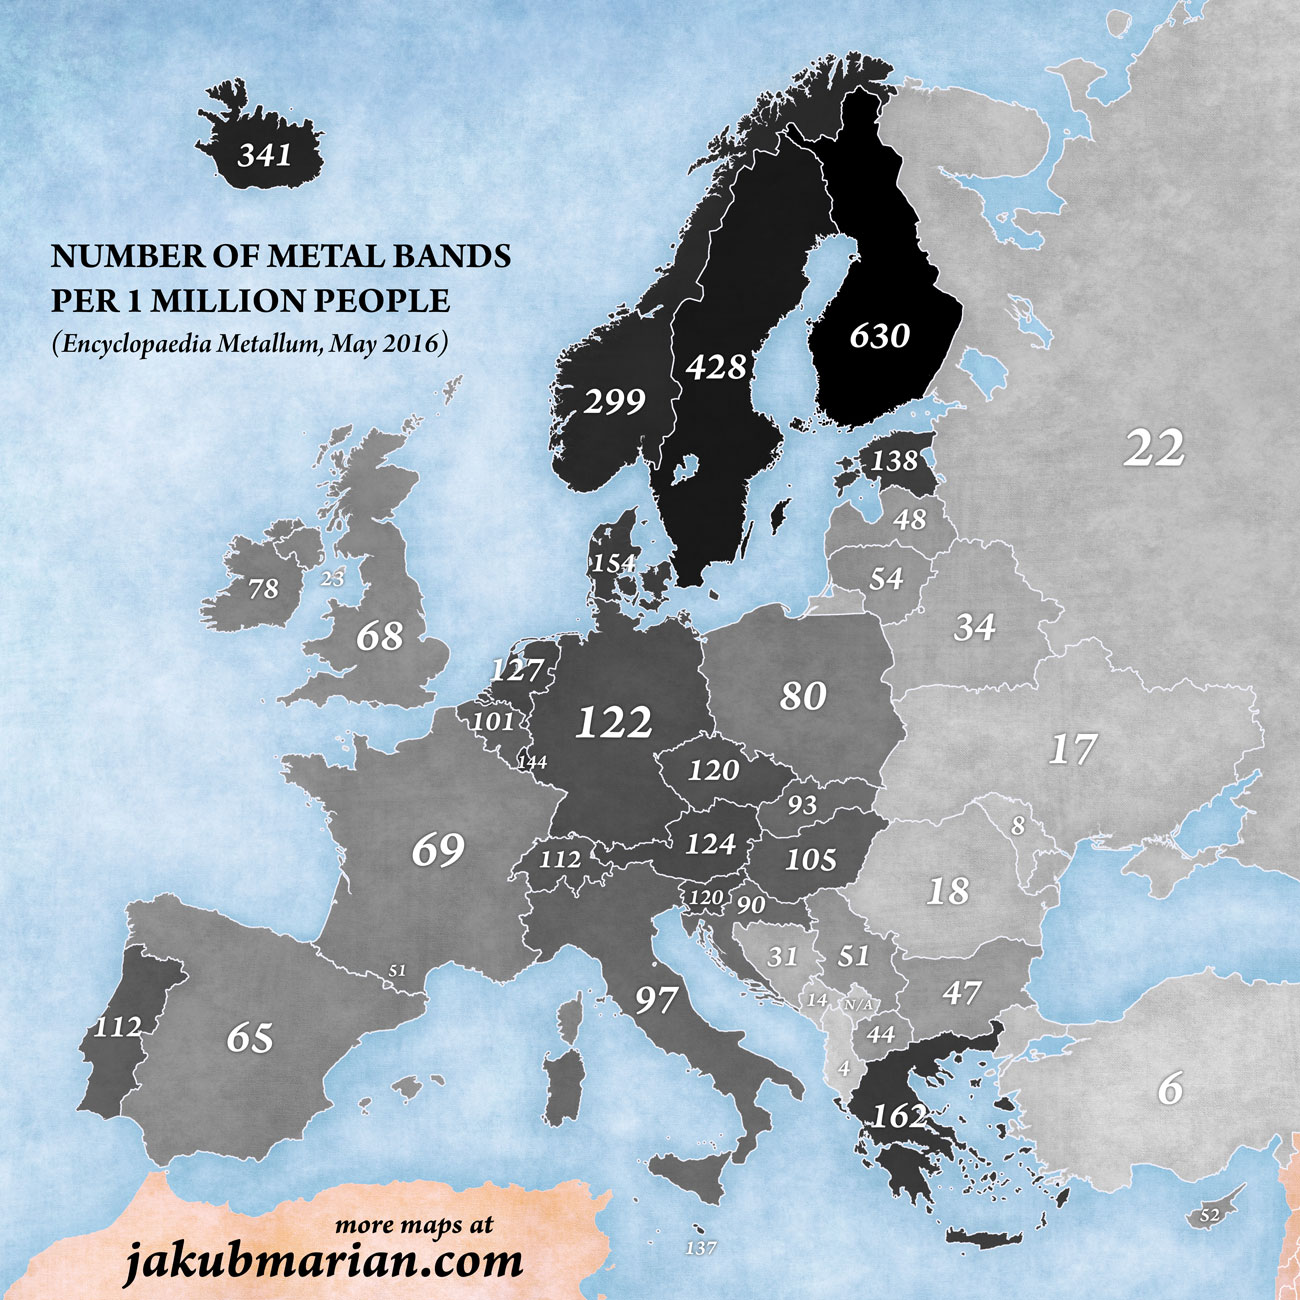 Number of metal bands per capita in Europe by Jakub Marian